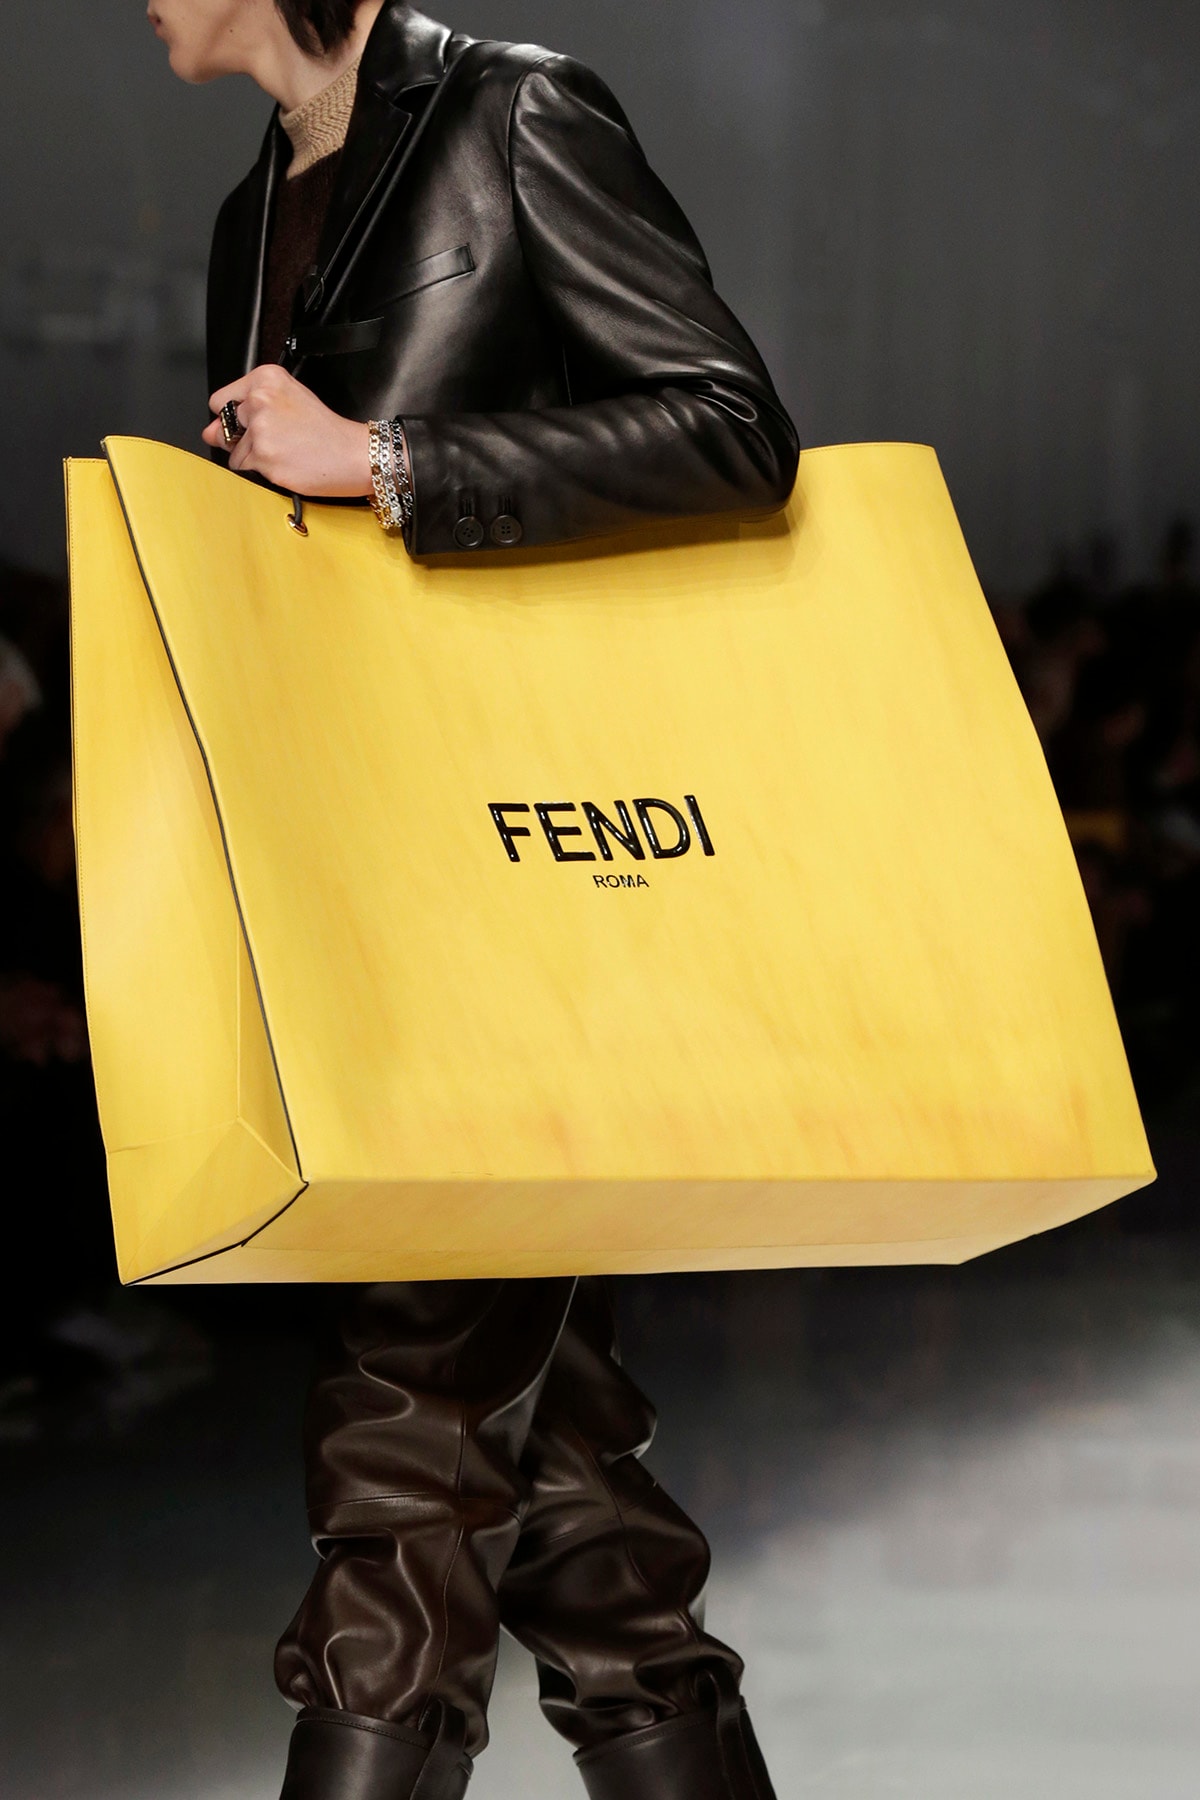 Fendi Fall/Winter 2020 Collection Shopping Bag